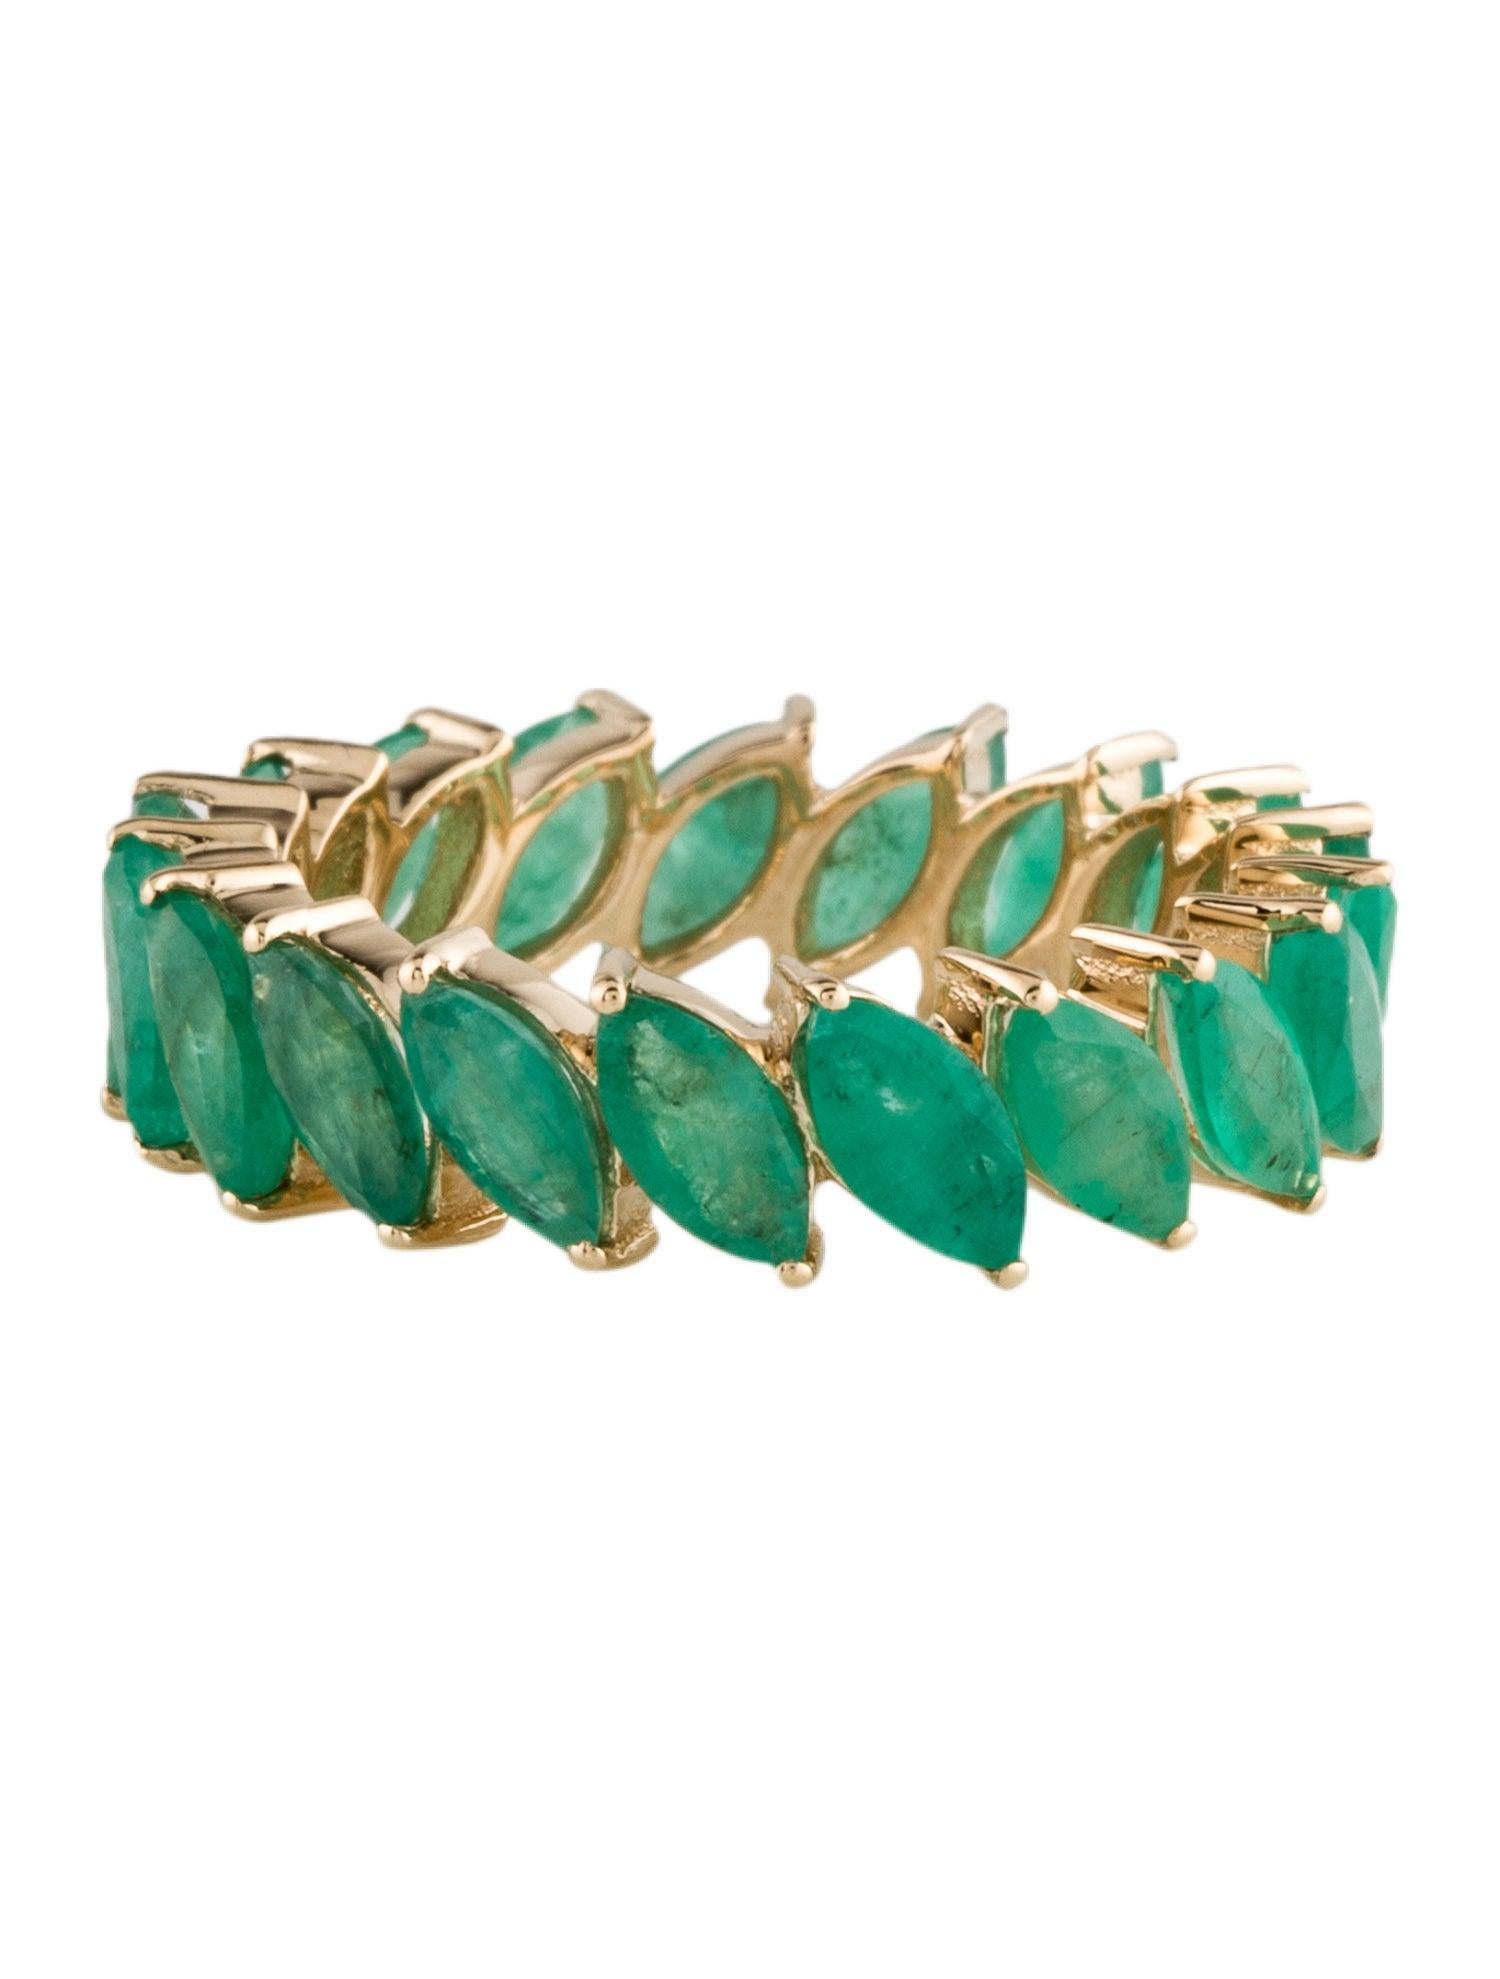 Brilliant Cut Elegant 14K Emerald Eternity Band Ring - 3.23ctw Gemstones - Size 6.75  Vintage For Sale